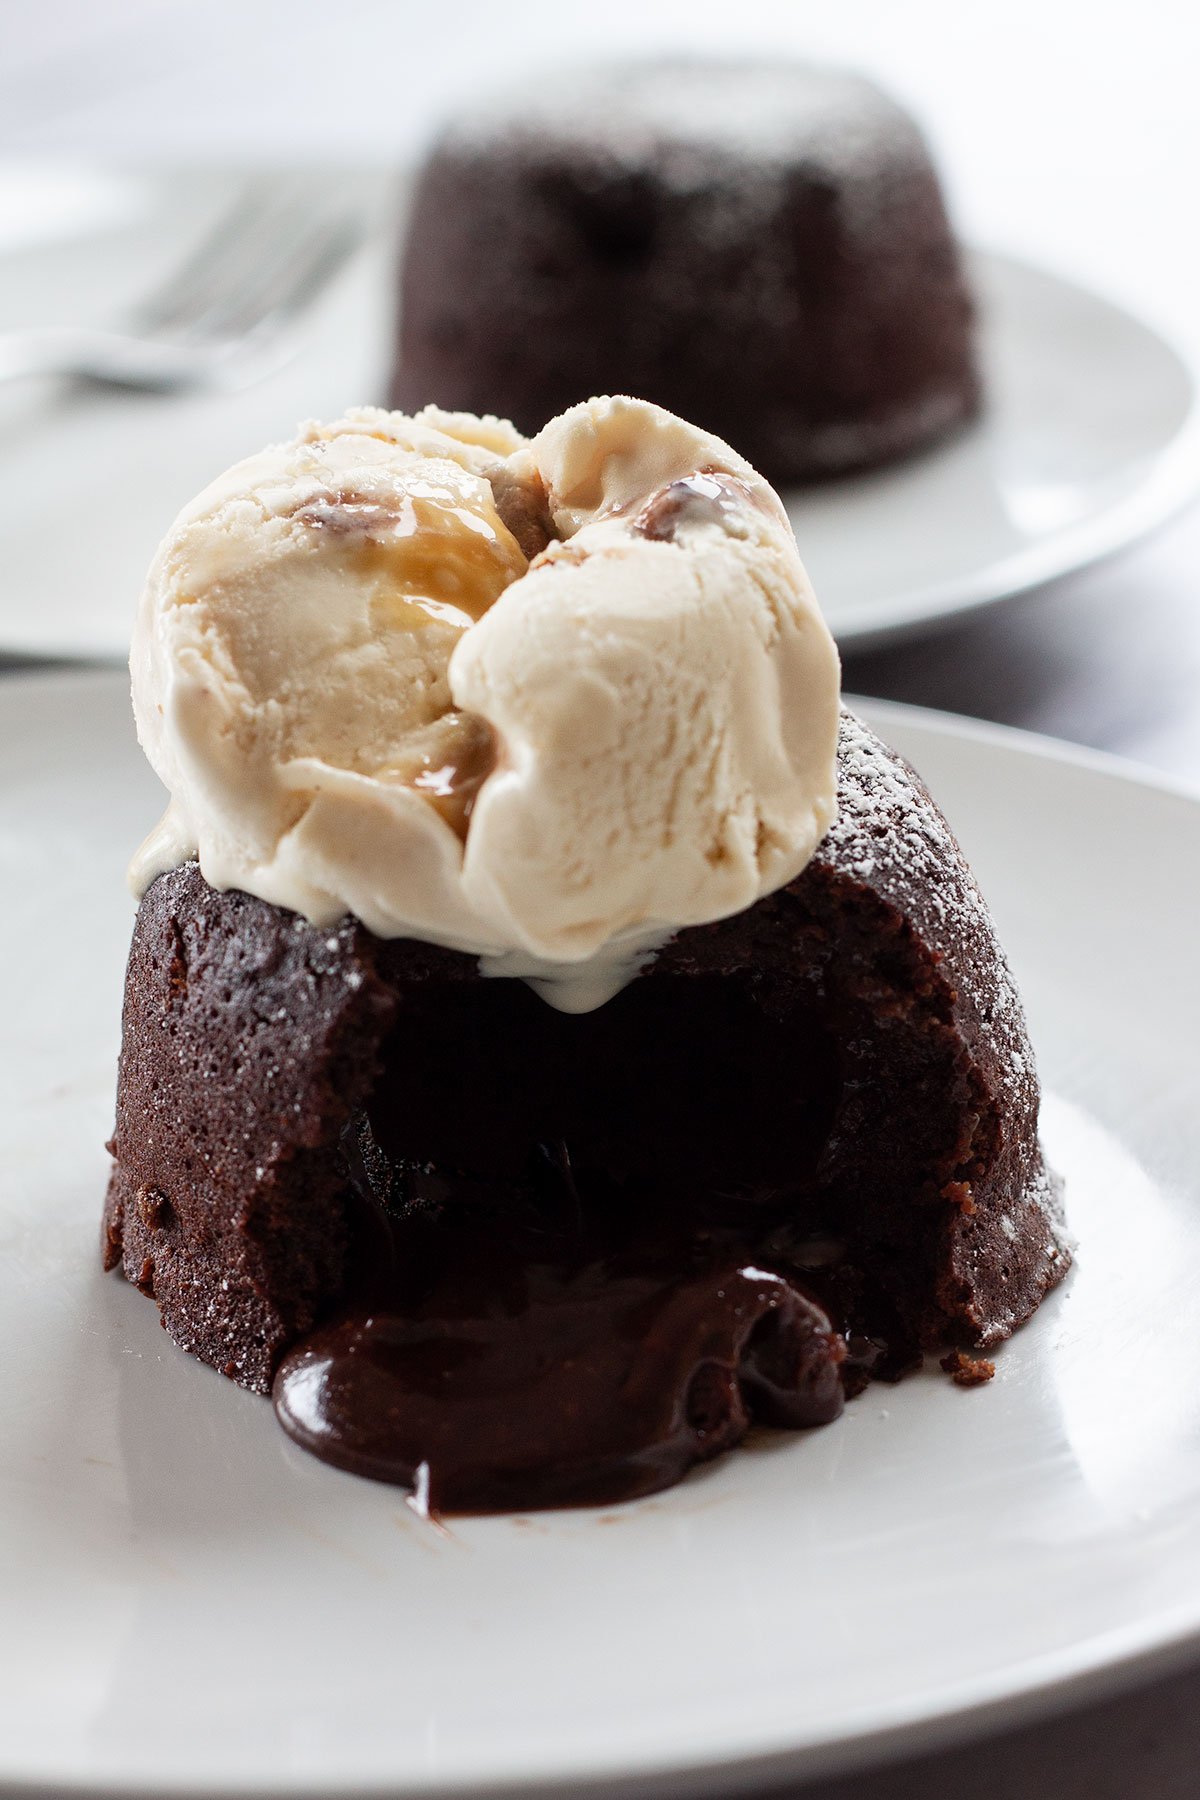 A chocolate lava cake with ice cream.